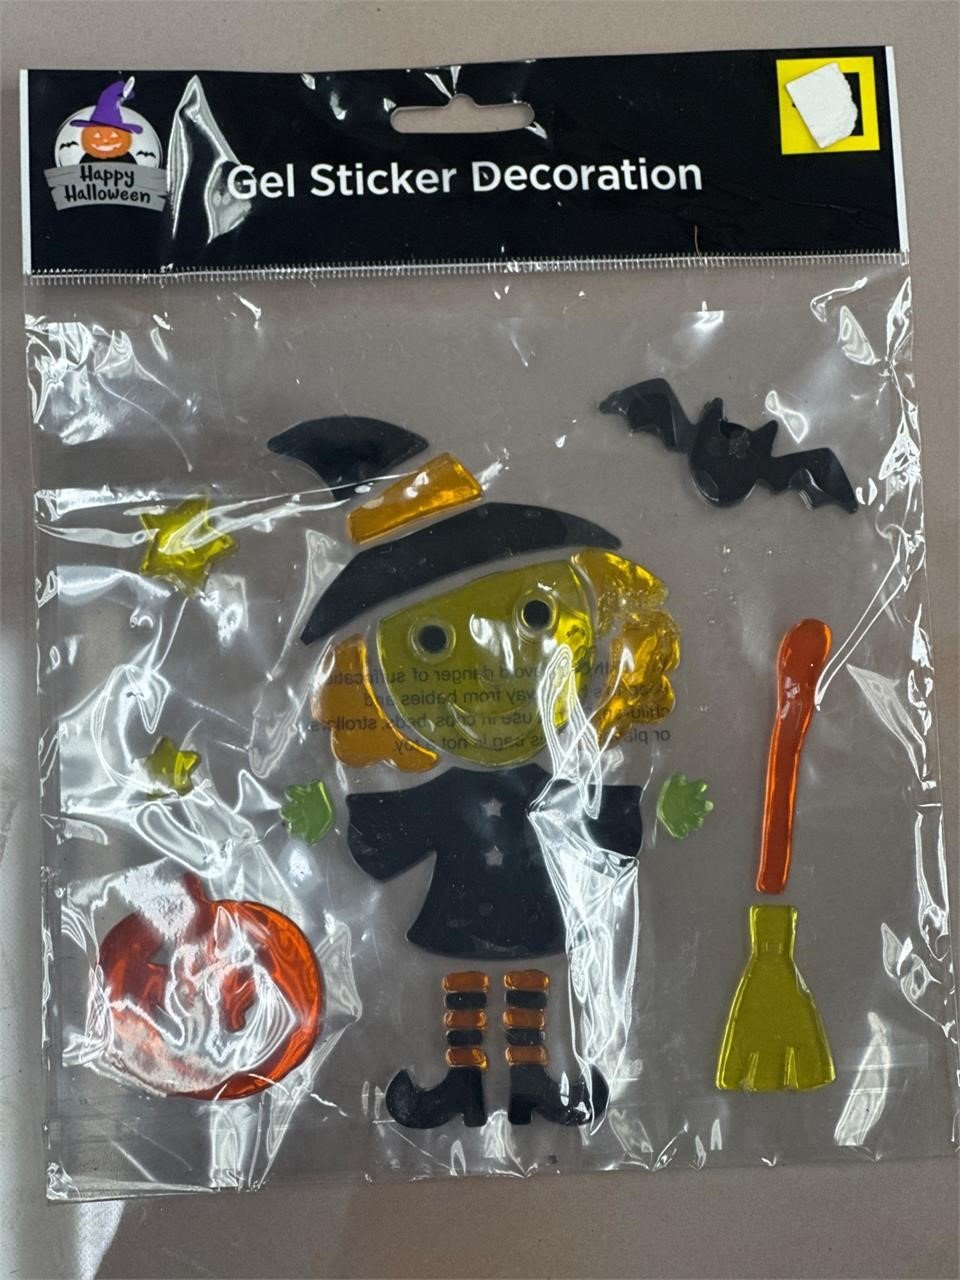 Gel stickers decorations